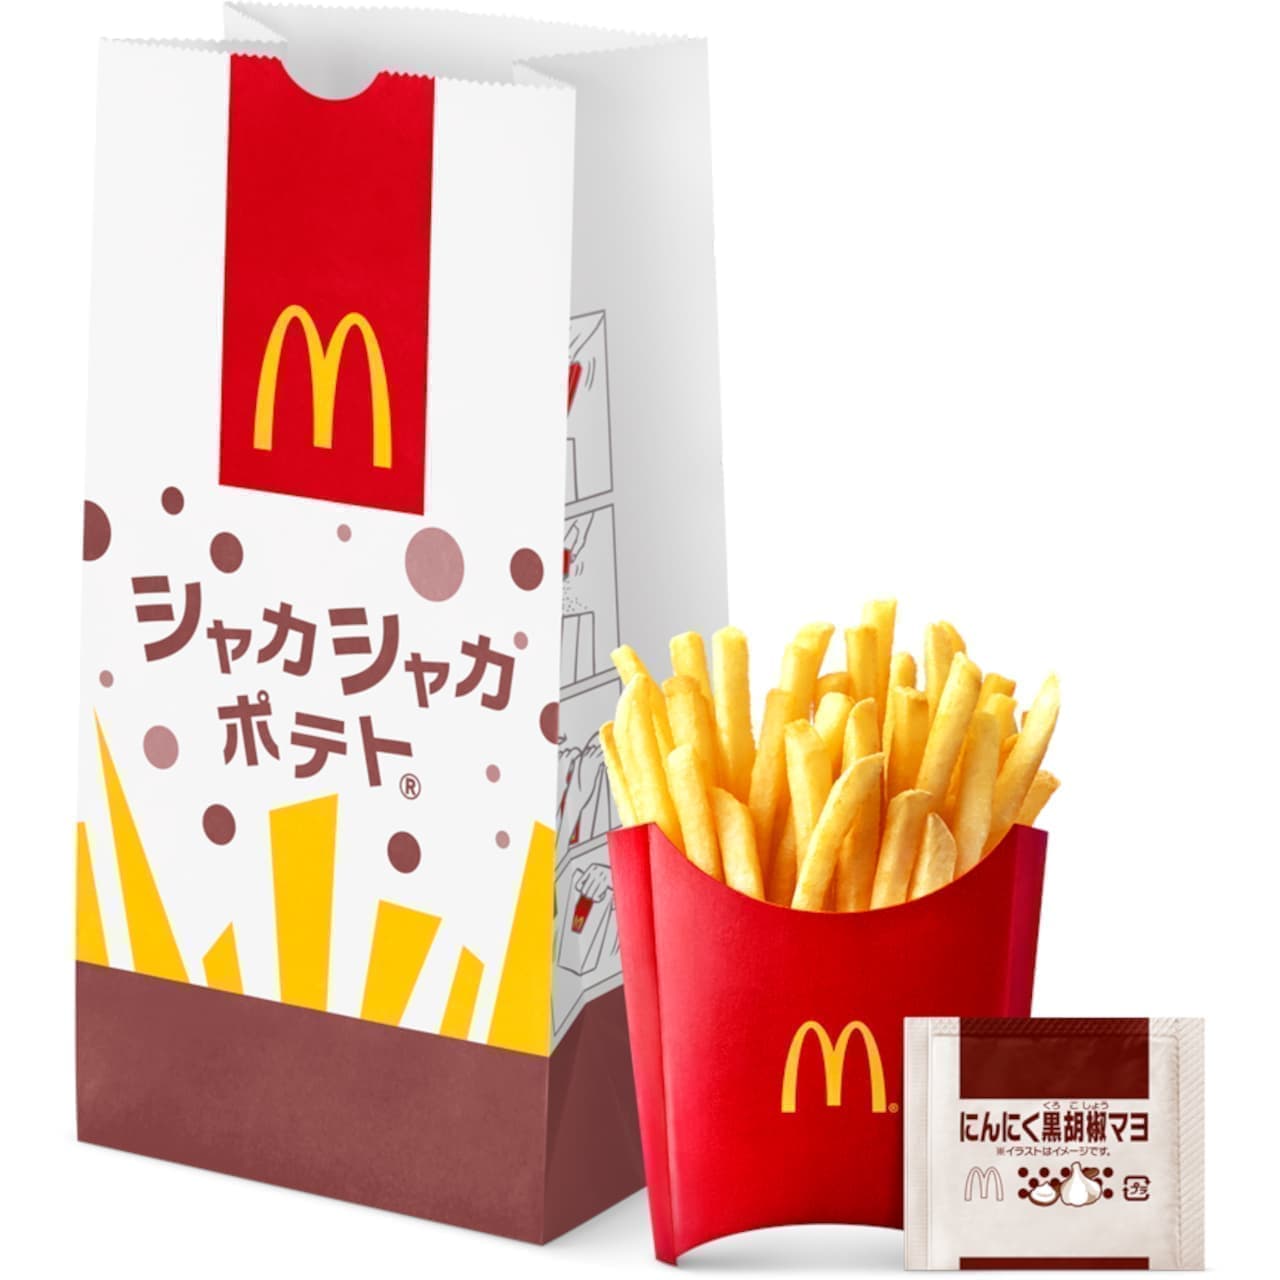 McDonald's "Shakashaka Potatoes with Garlic Black Pepper Mayo Flavor"